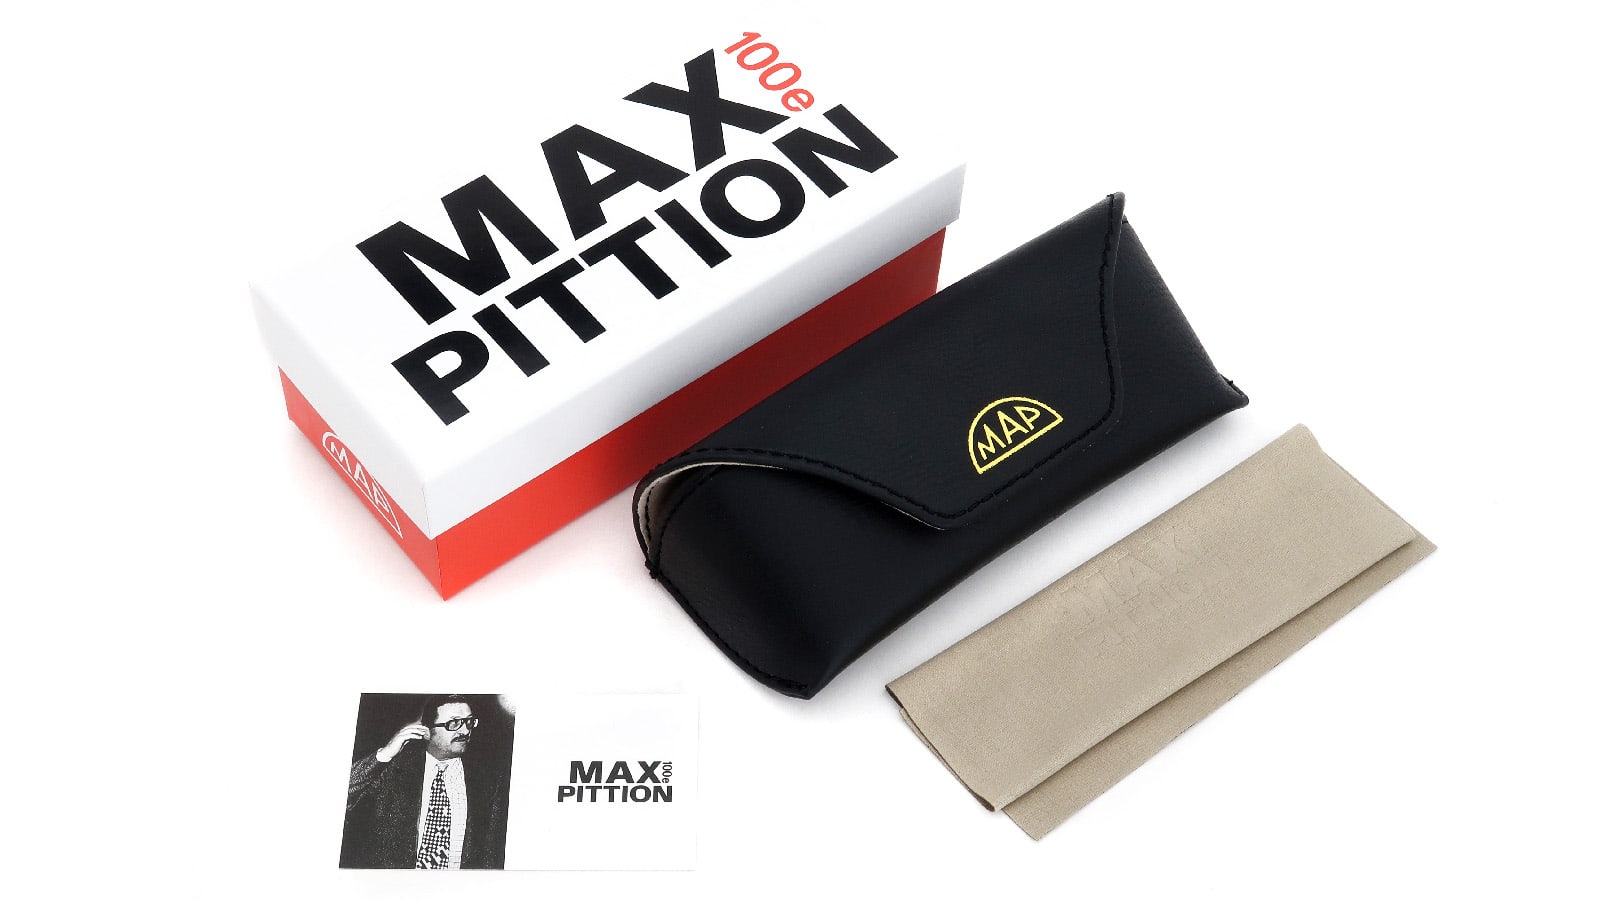 MAX PITTION PANTO 44 (MXPL-005B) RUBY ROUGE 15